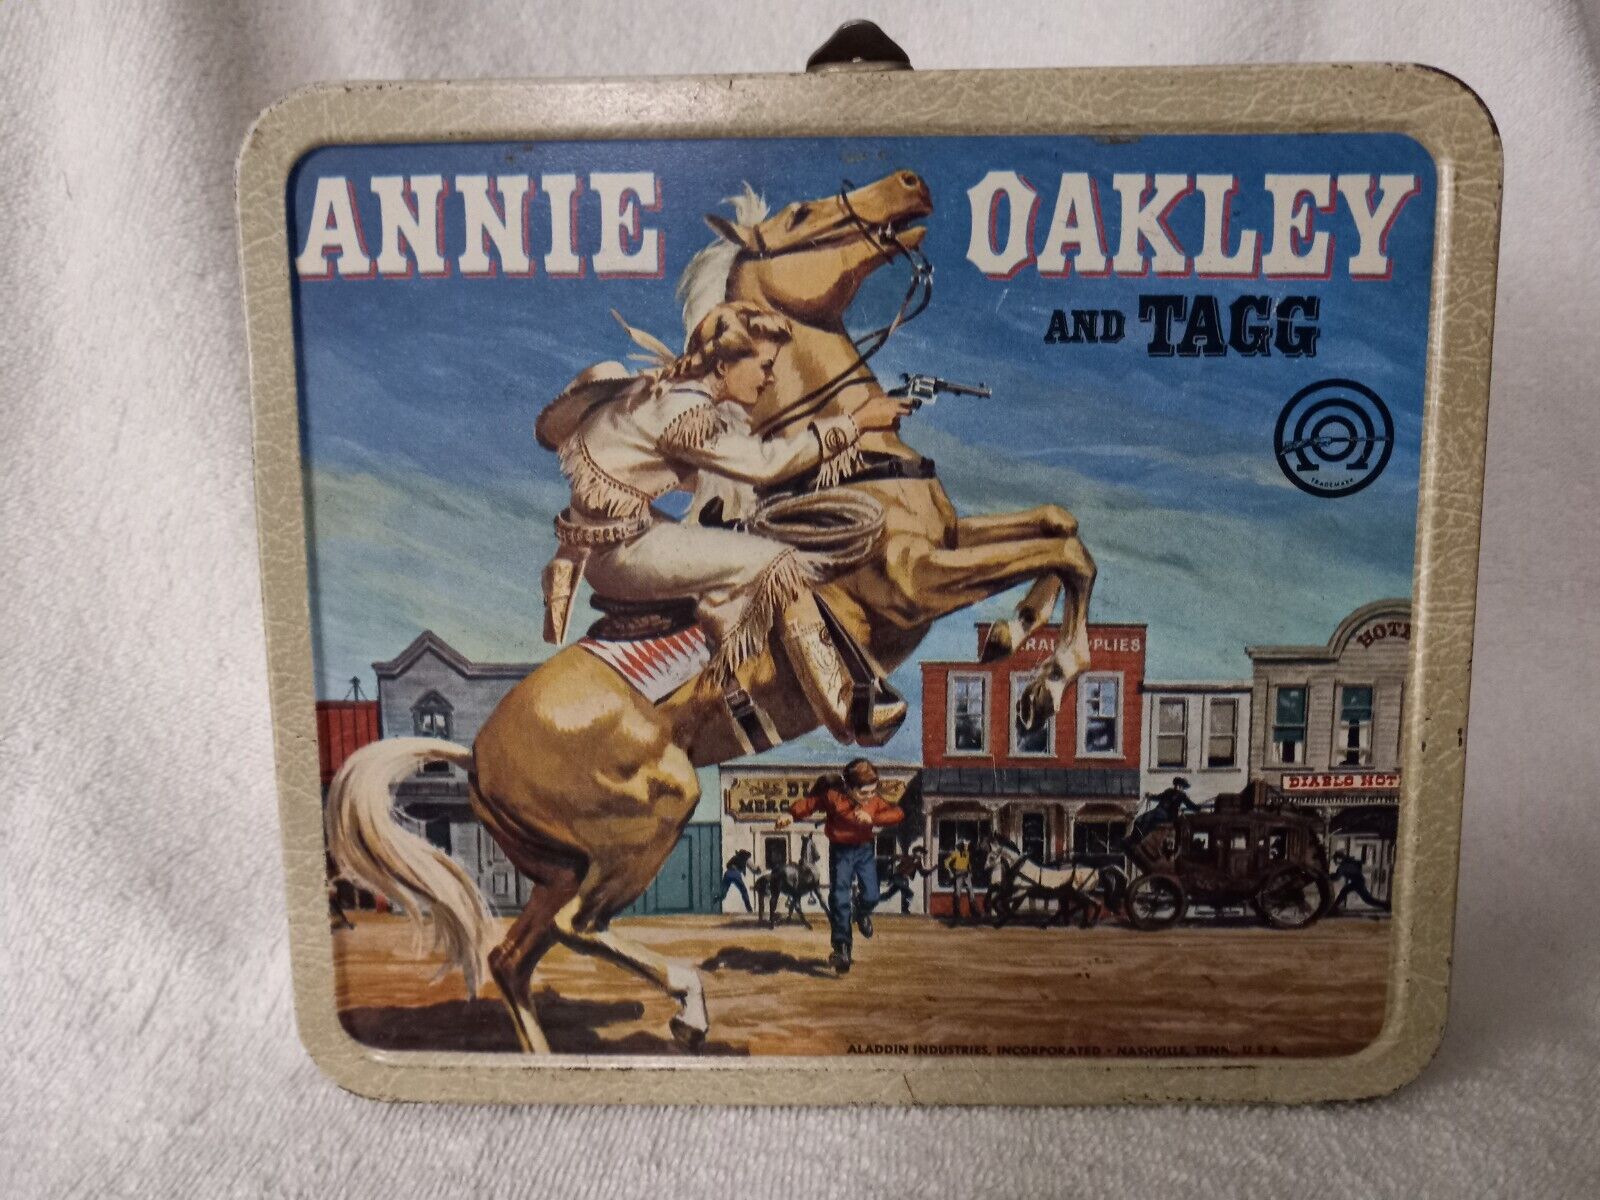 Vintage 1955 Metal ANNIE OAKLEY & TAGG Lunchbox (missing handle)